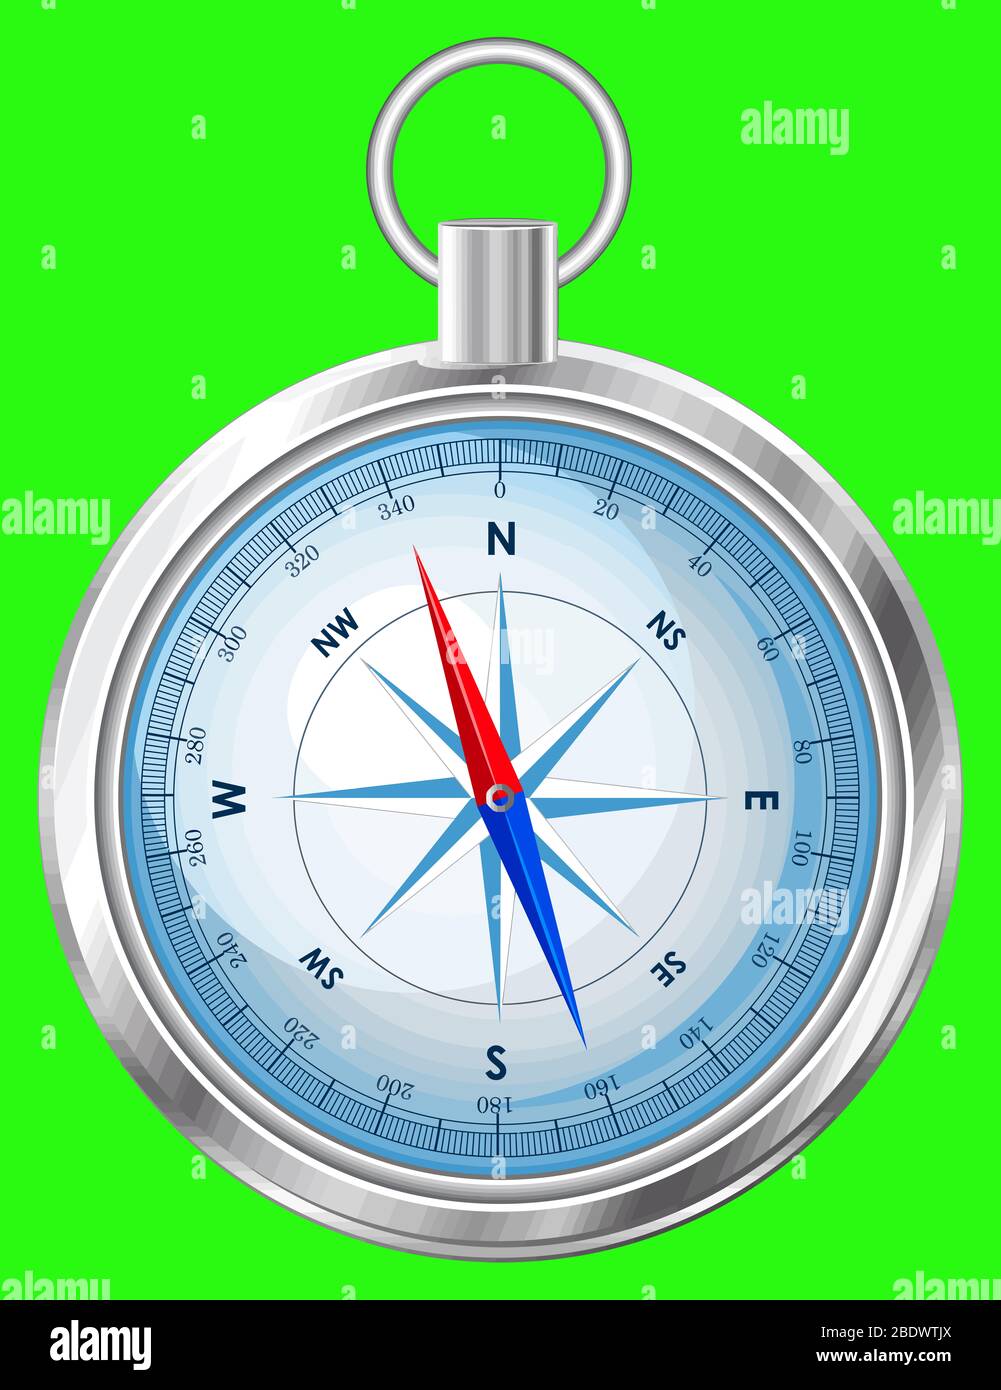 Kompass Richtung Magnet Reise grünen Hintergrund Illustration Stockfoto